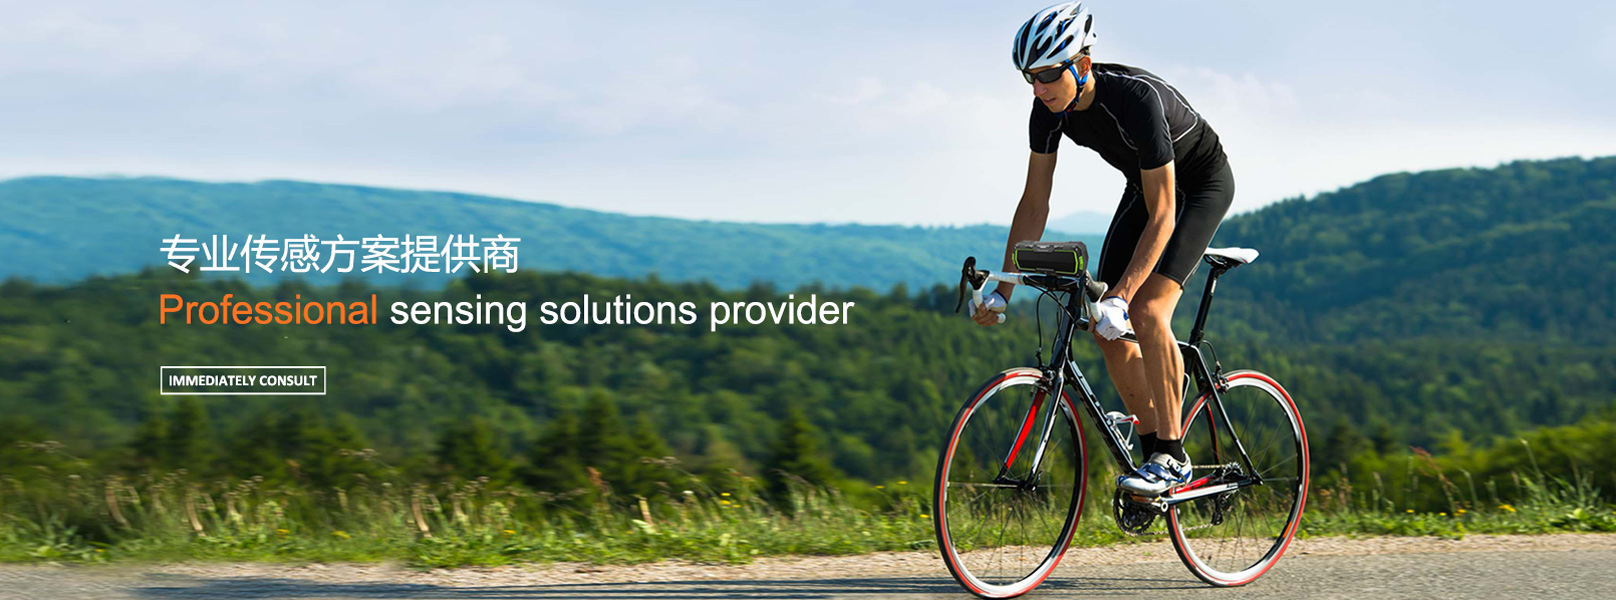 Professional sensor solutions provider